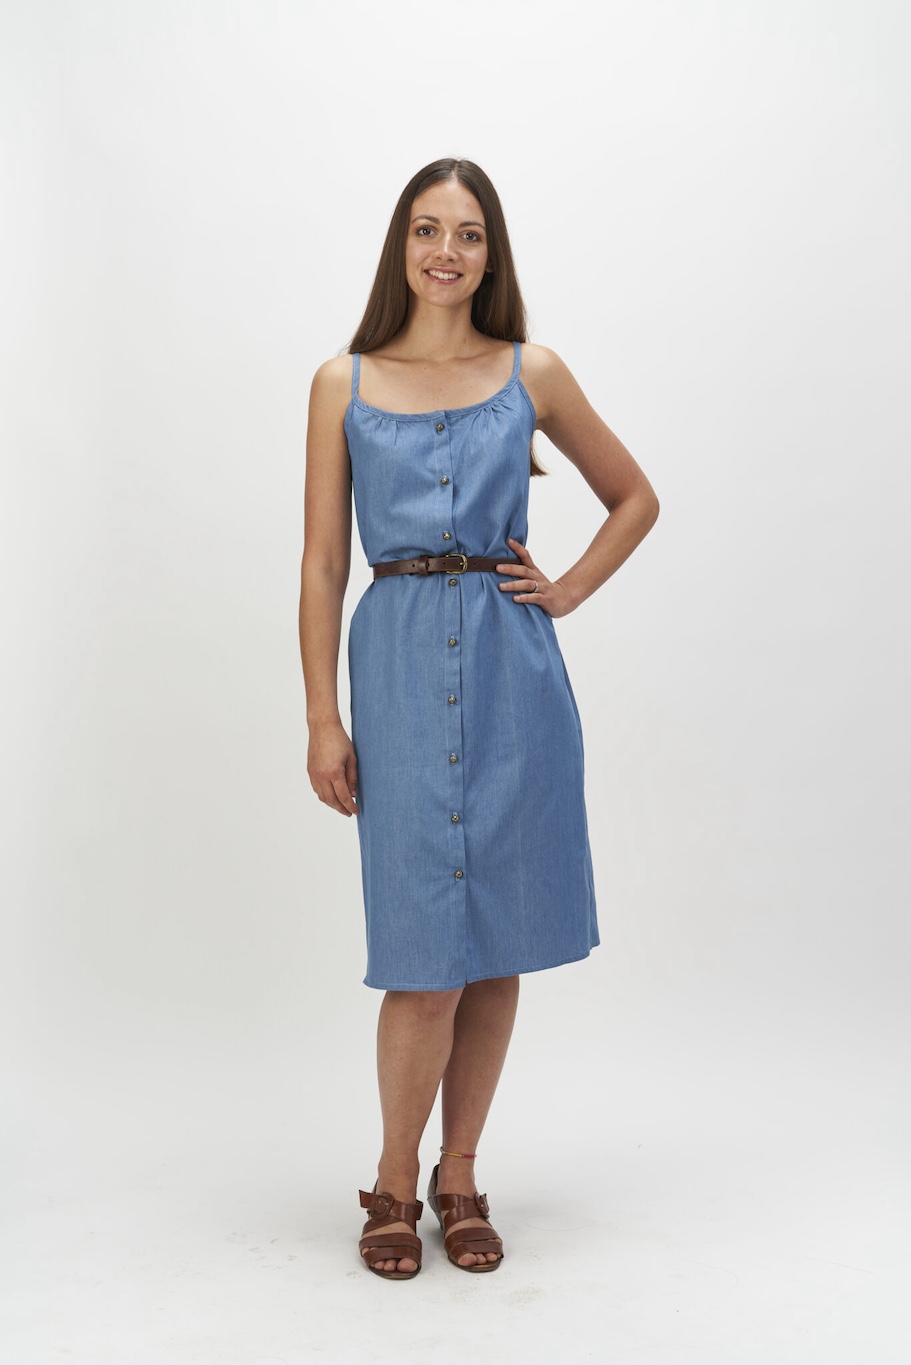 Simplicity Vintage Dress S9846 - The Fold Line